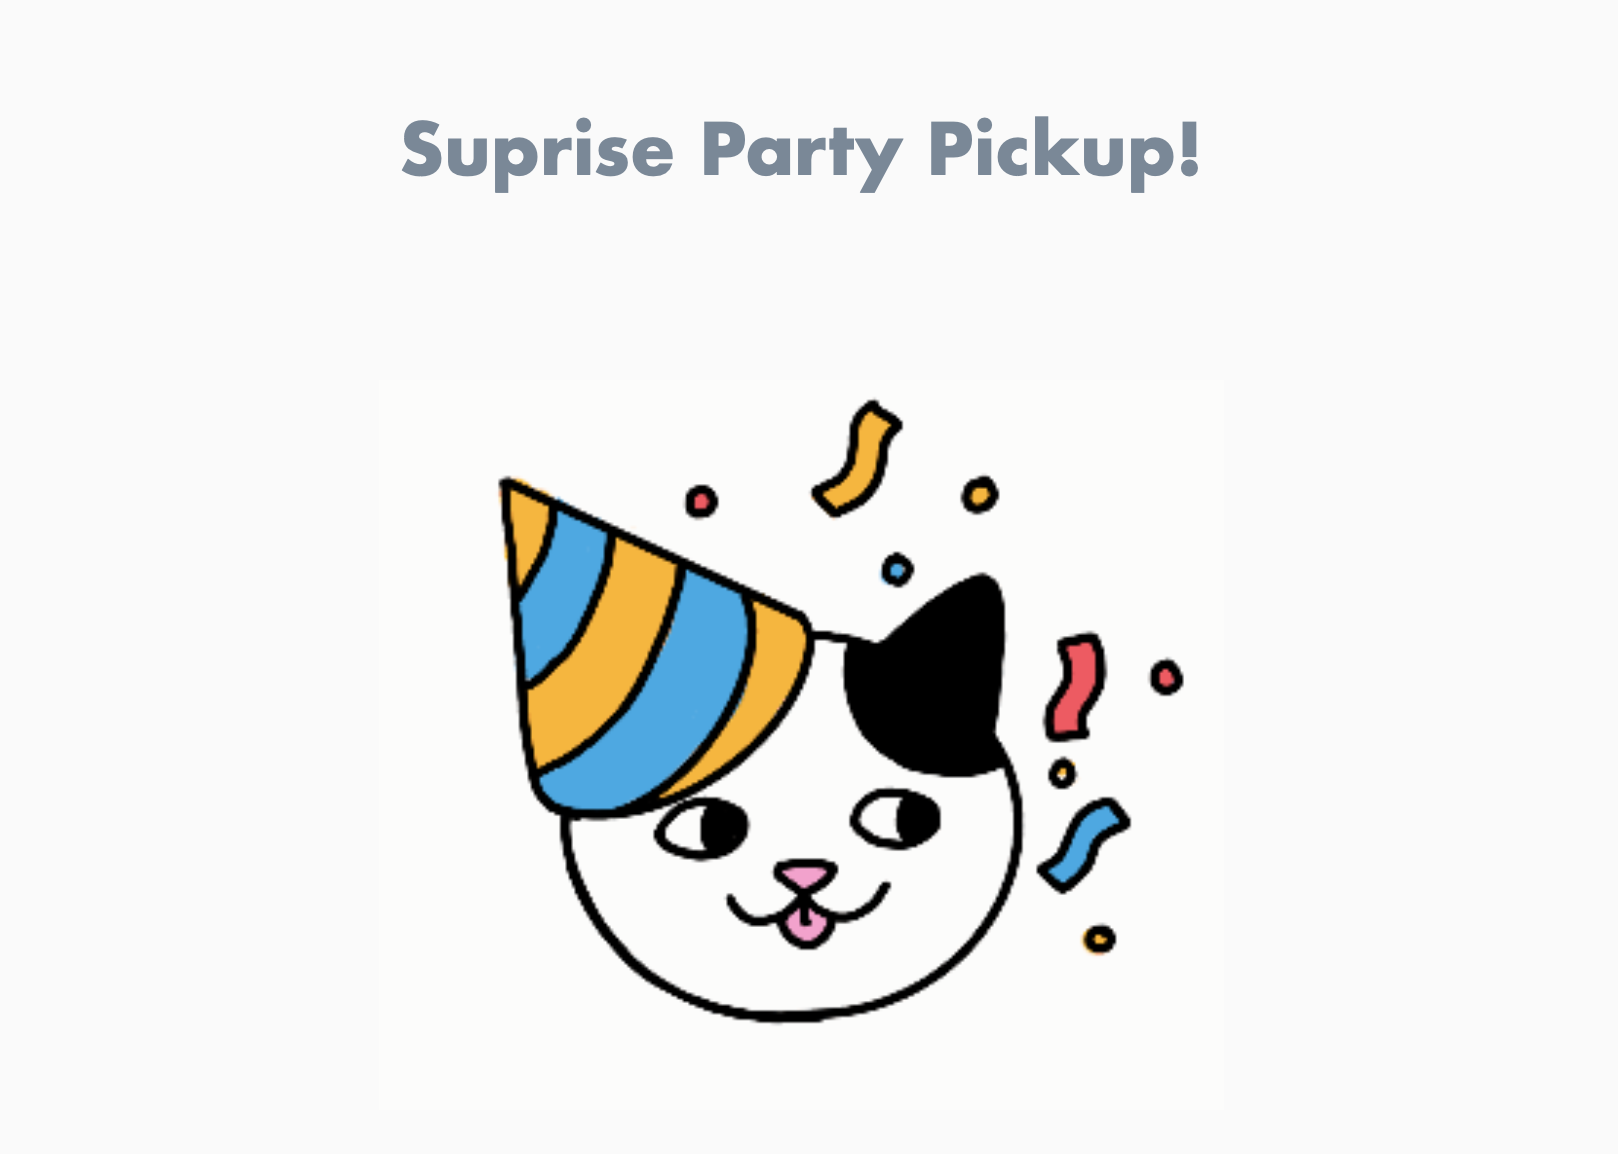 Surprise Party Pickup!